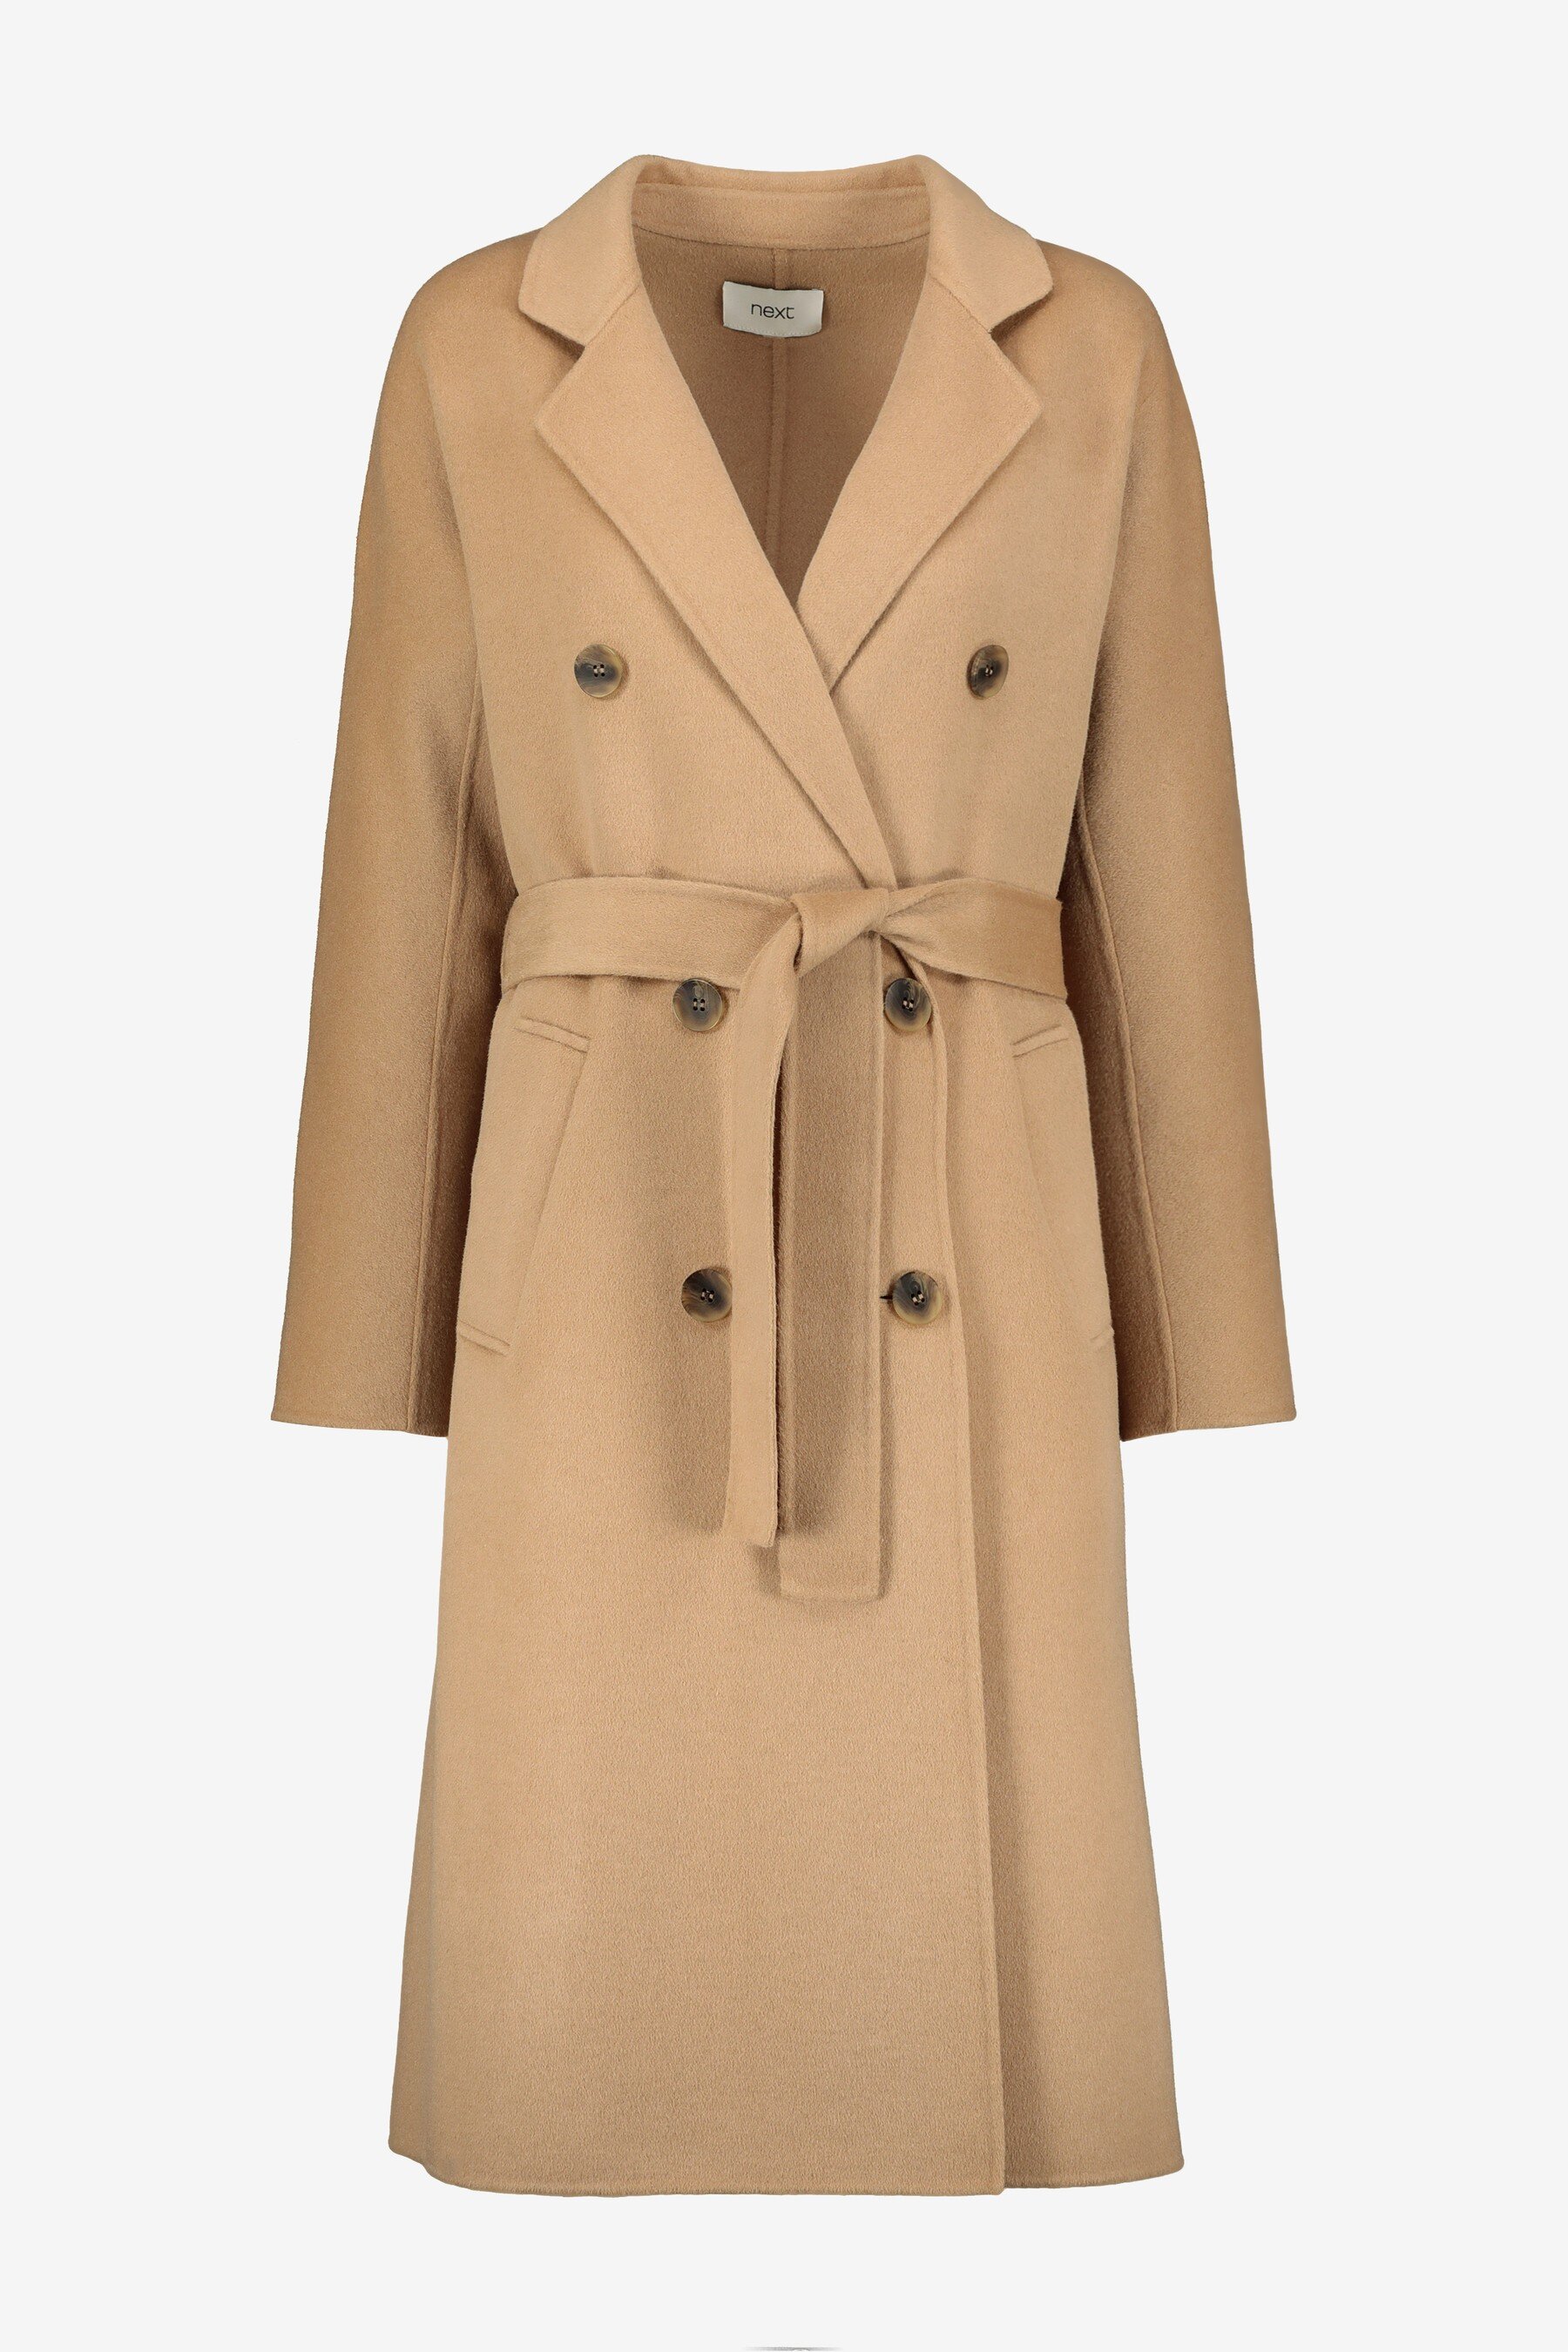 Coat, £120, Next